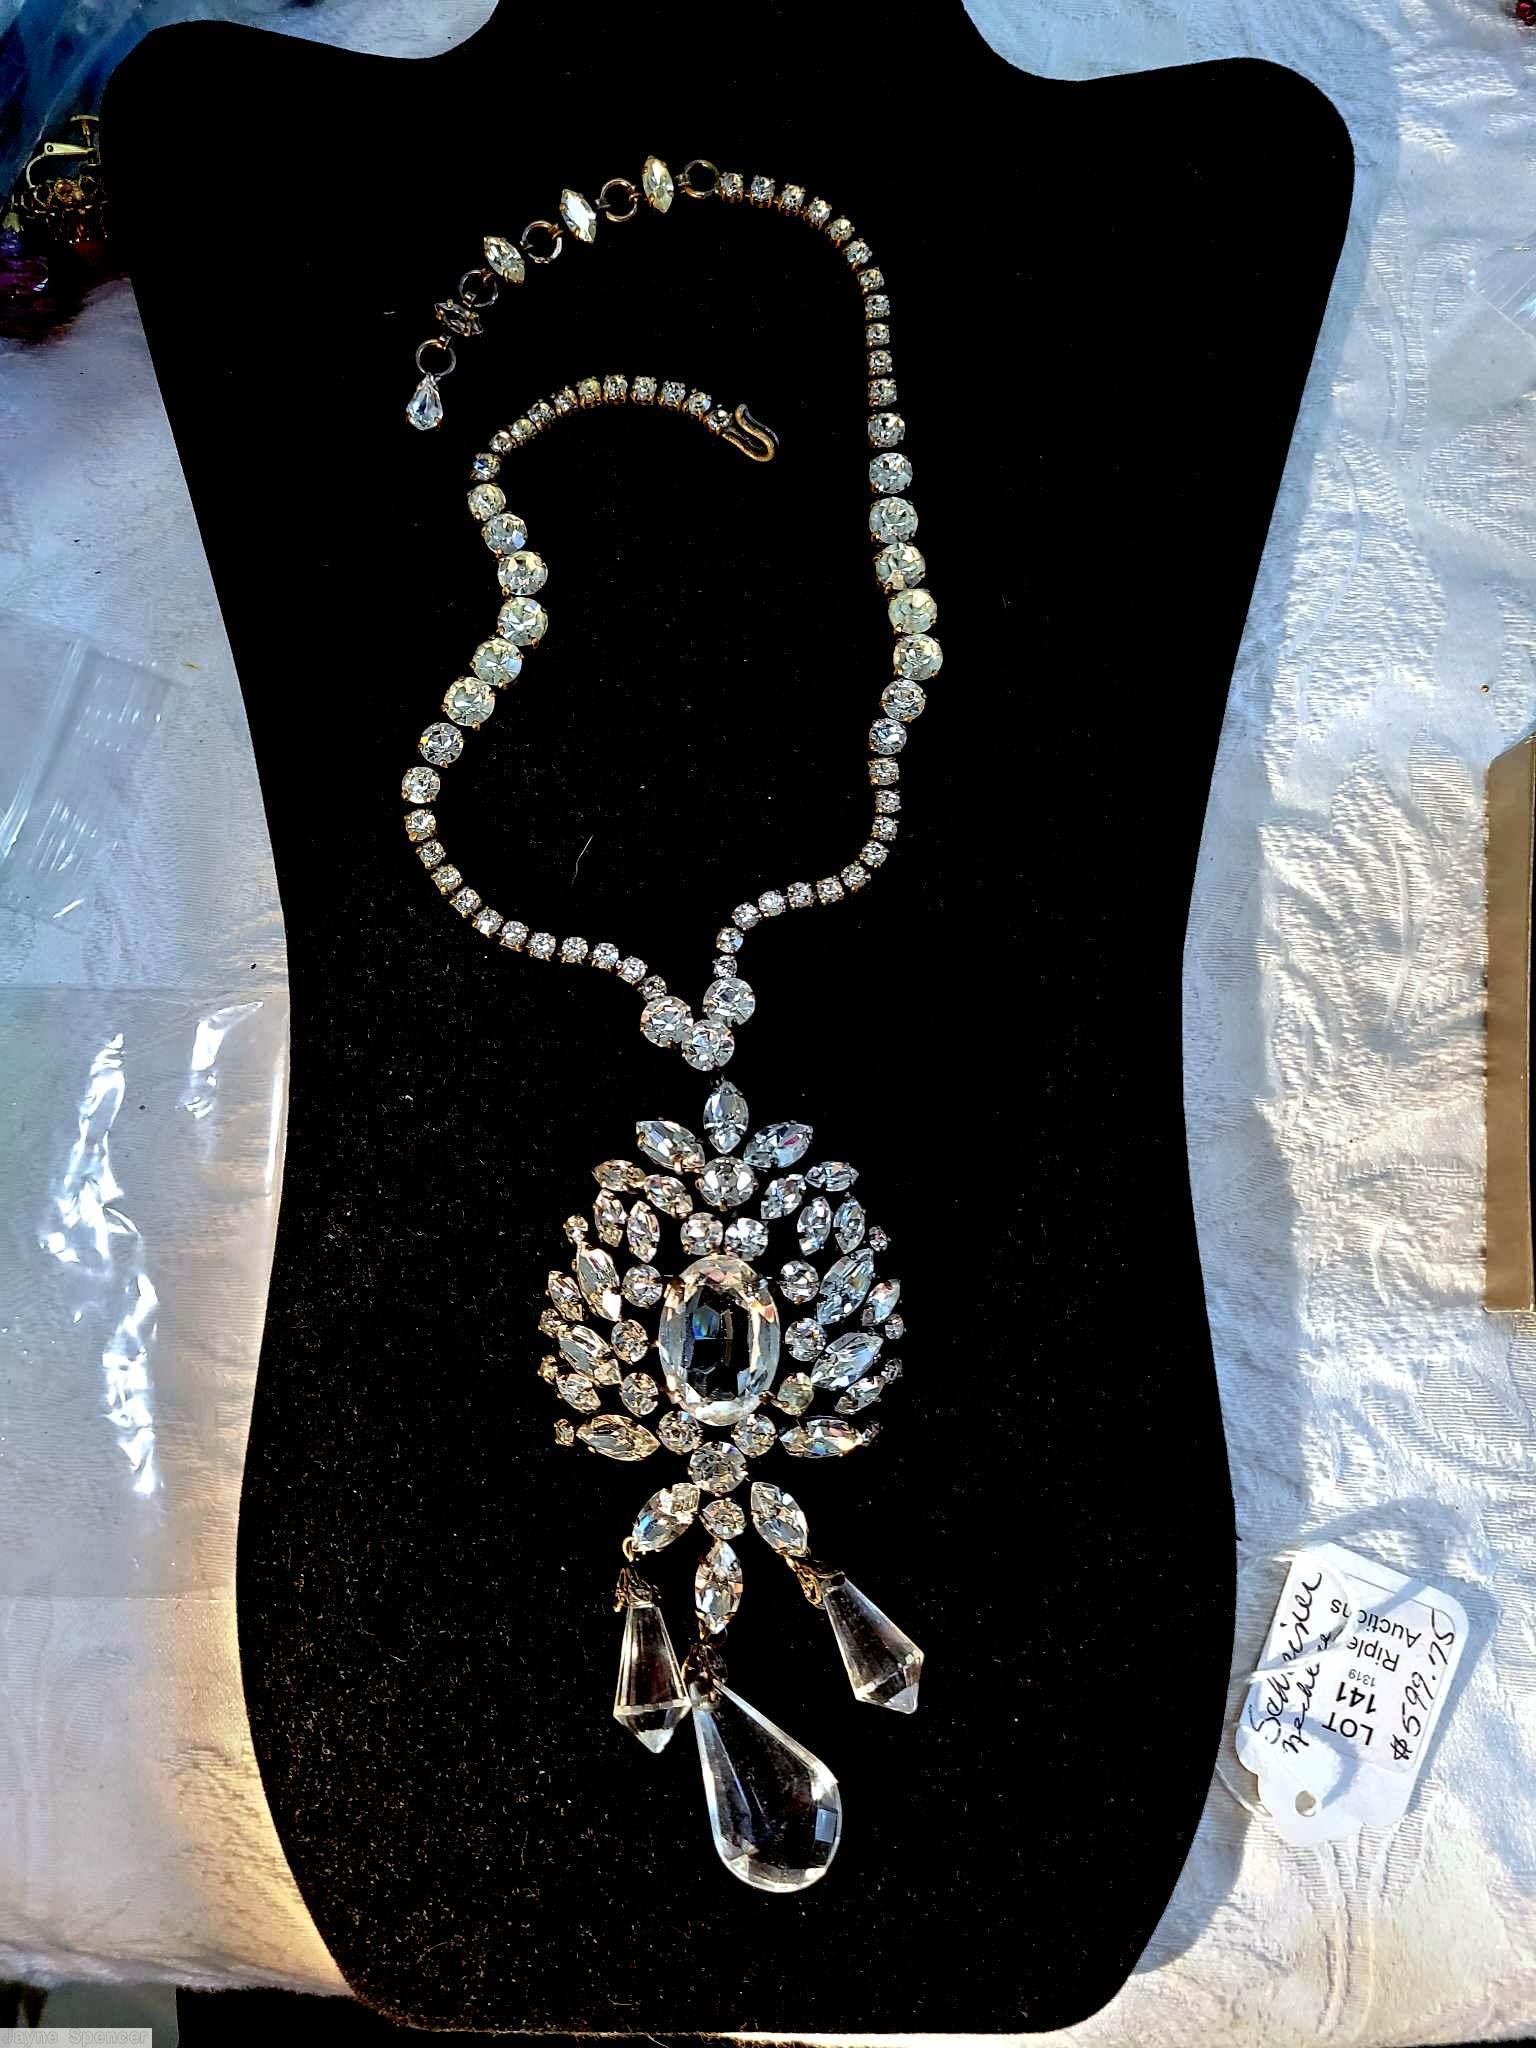 Schreiner dahlia pendant single strand 3 dangling teardrop faux pearl large oval white moon rock crystal silvertone jewelry